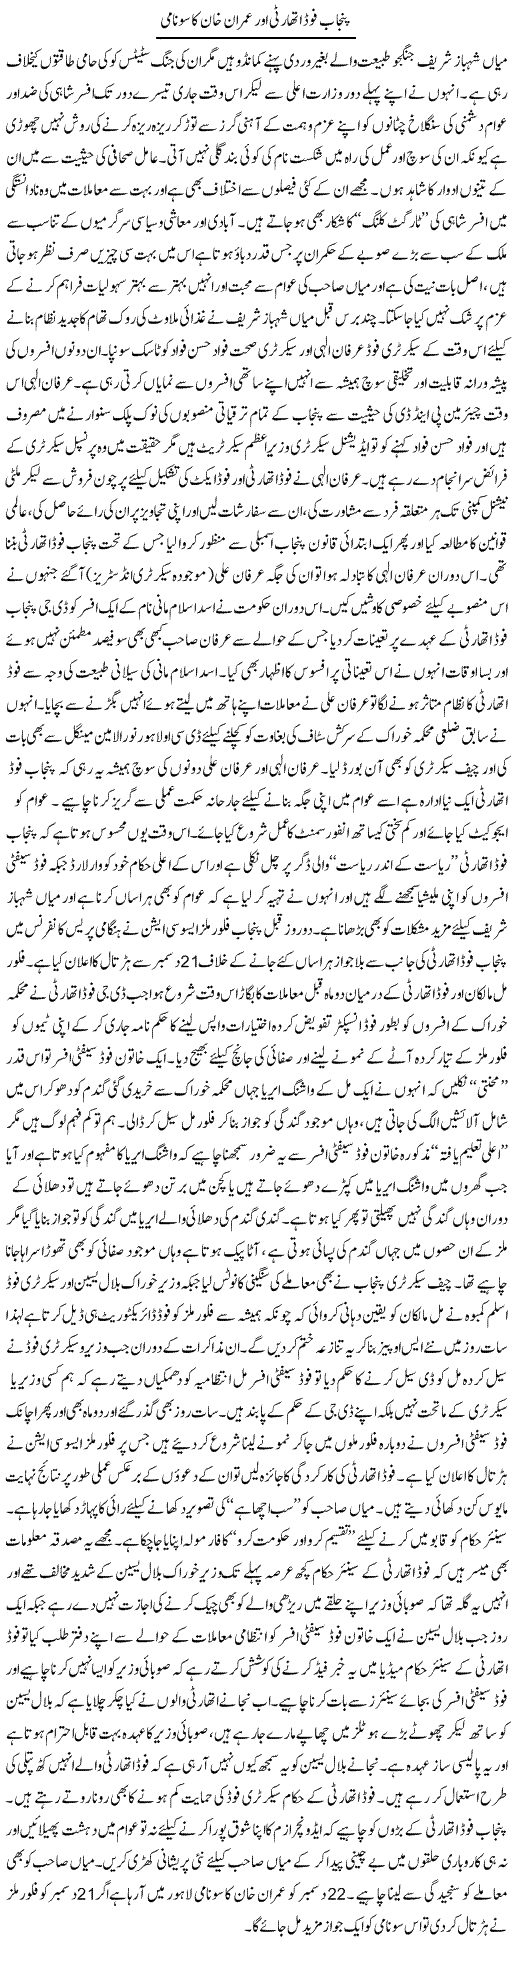 Punjab Food Authority Our Imran Khan | Rizwan Asif | Daily Urdu Columns